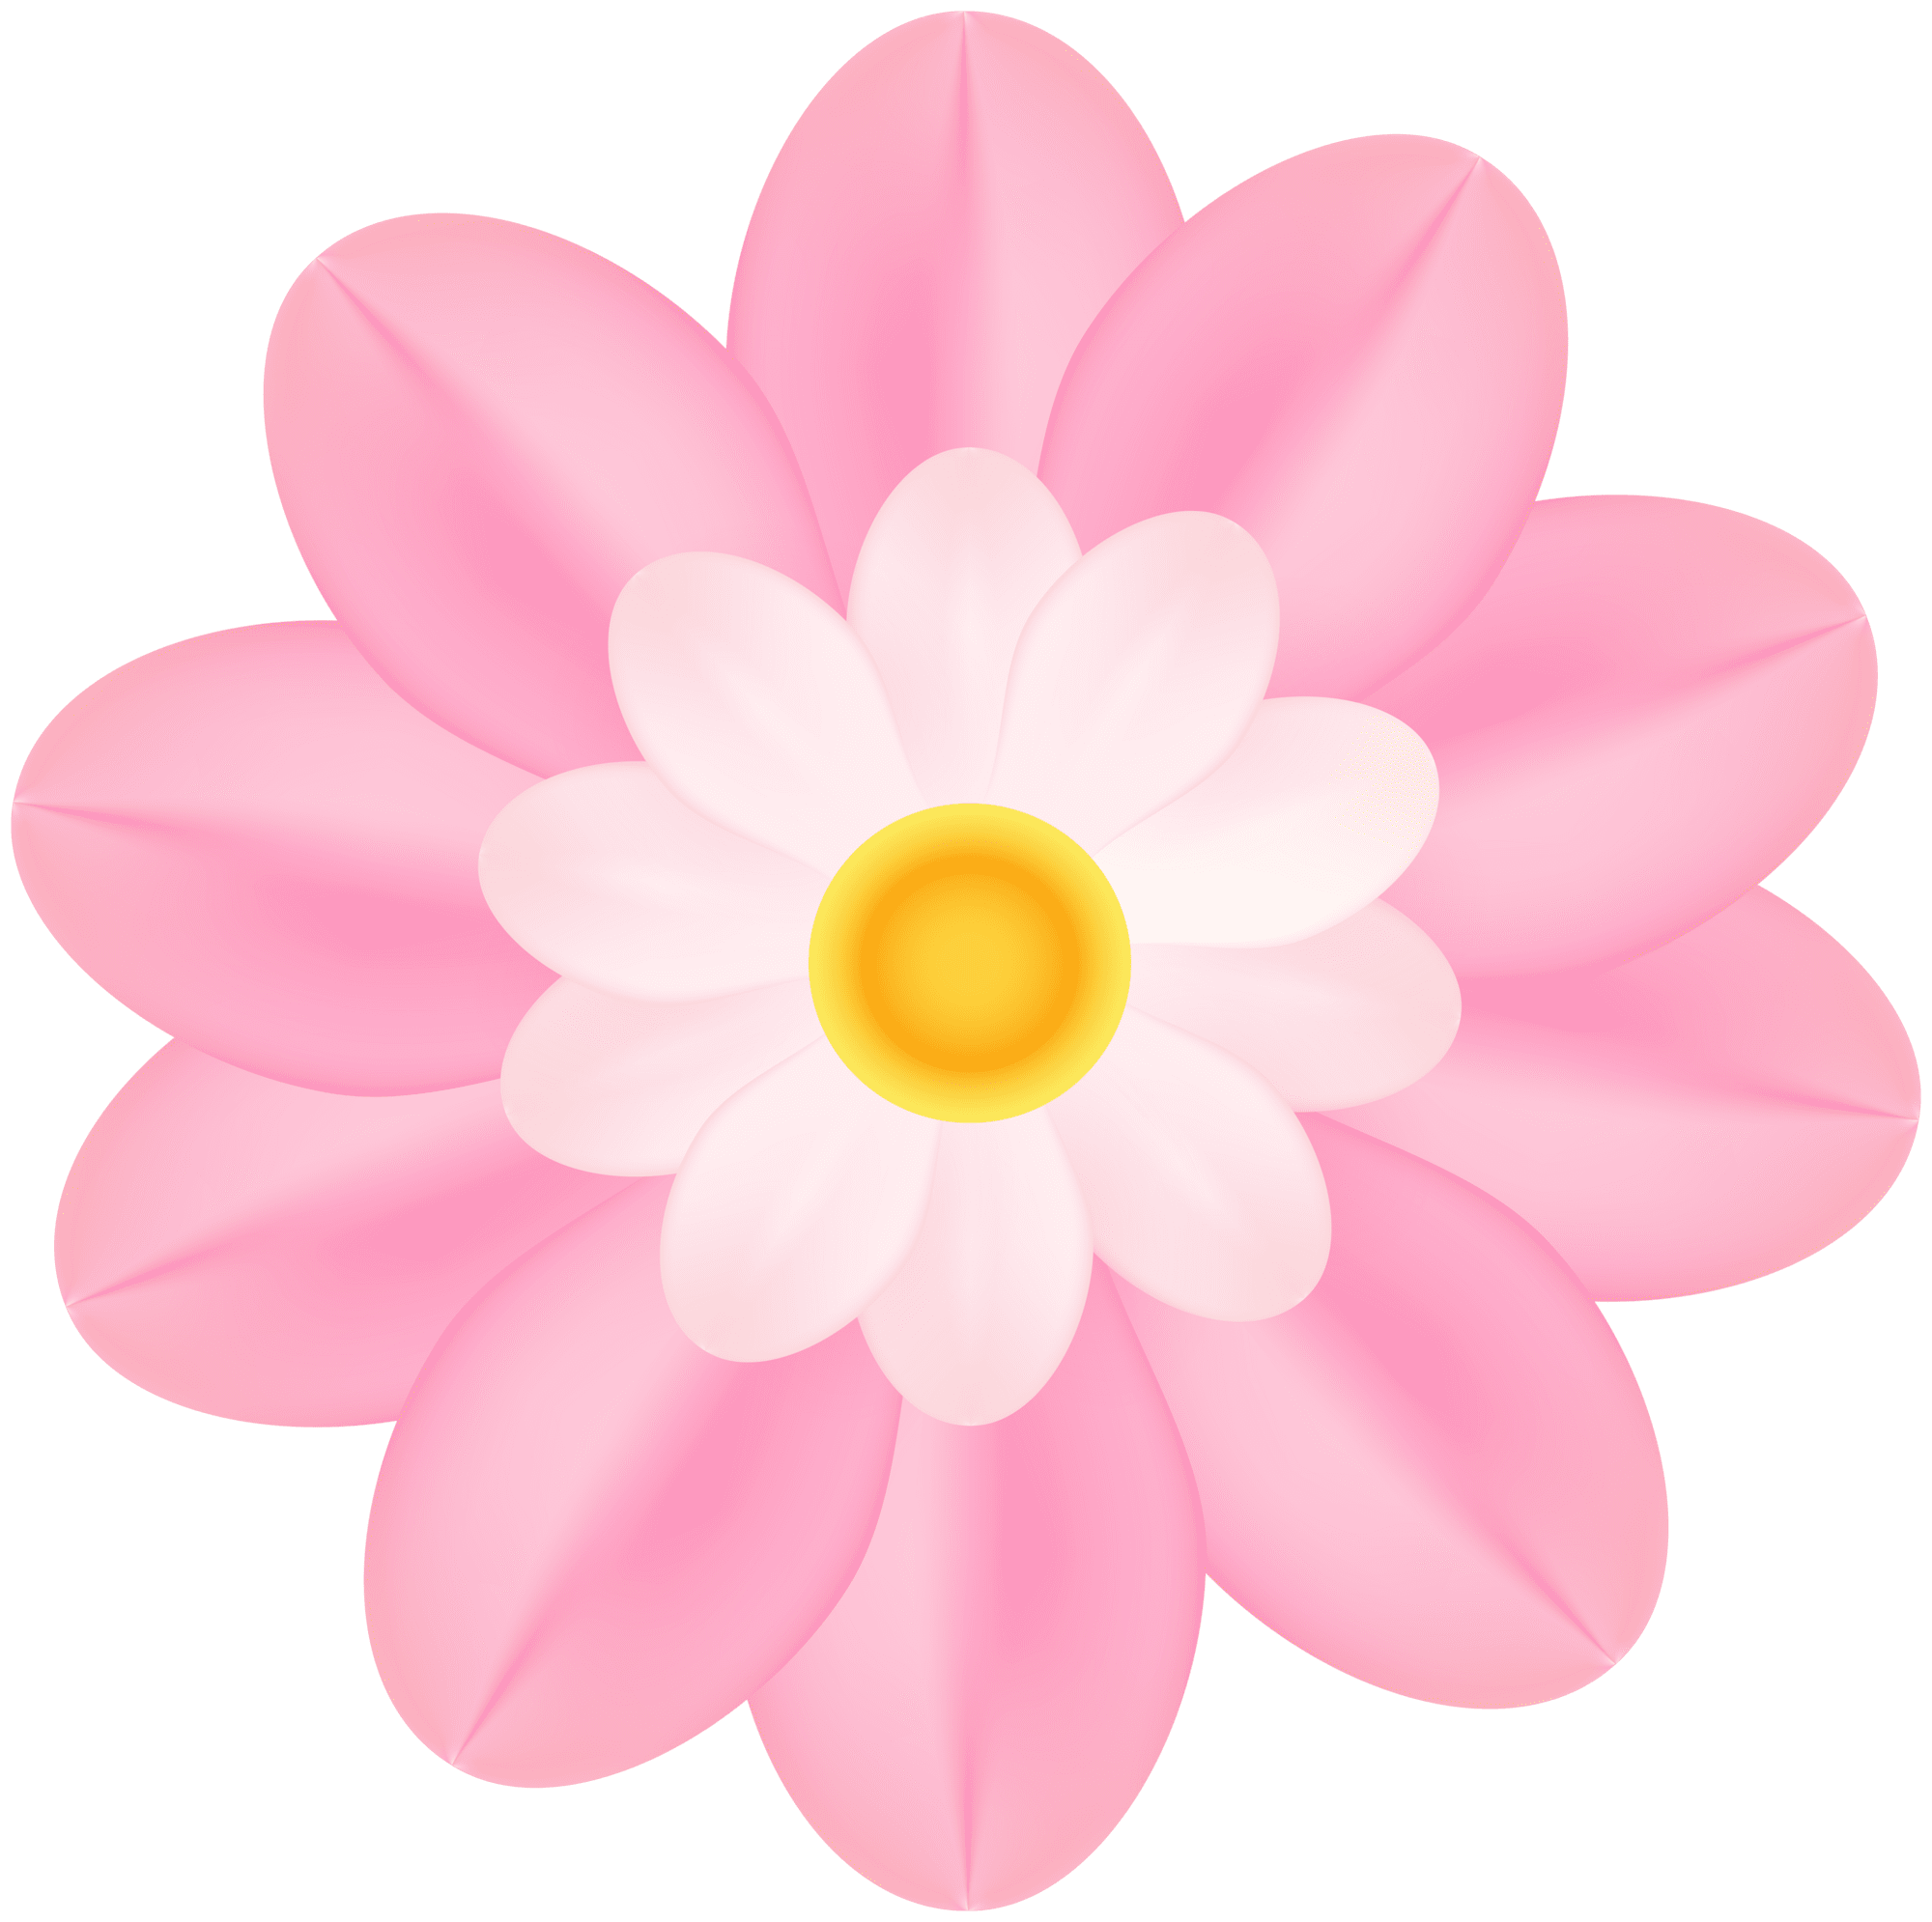 Pink flower soft decorative clipart image